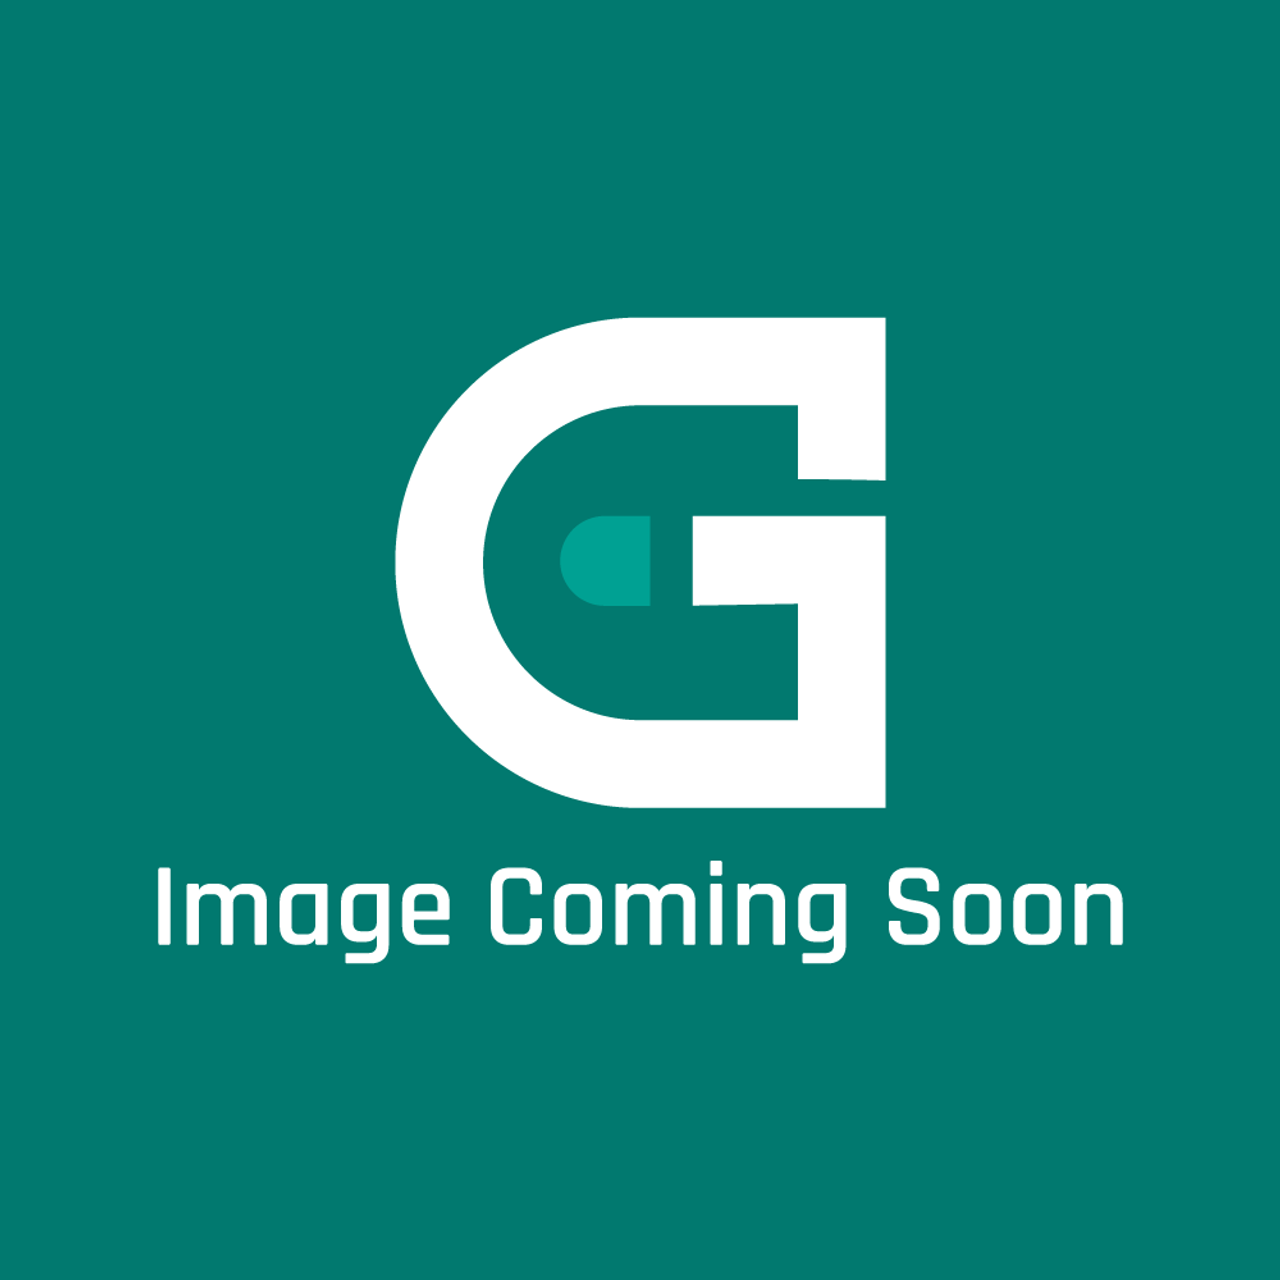 AGA Marvel RG4M341419 - Reset Switch (C5559Atnad)230V - Image Coming Soon!